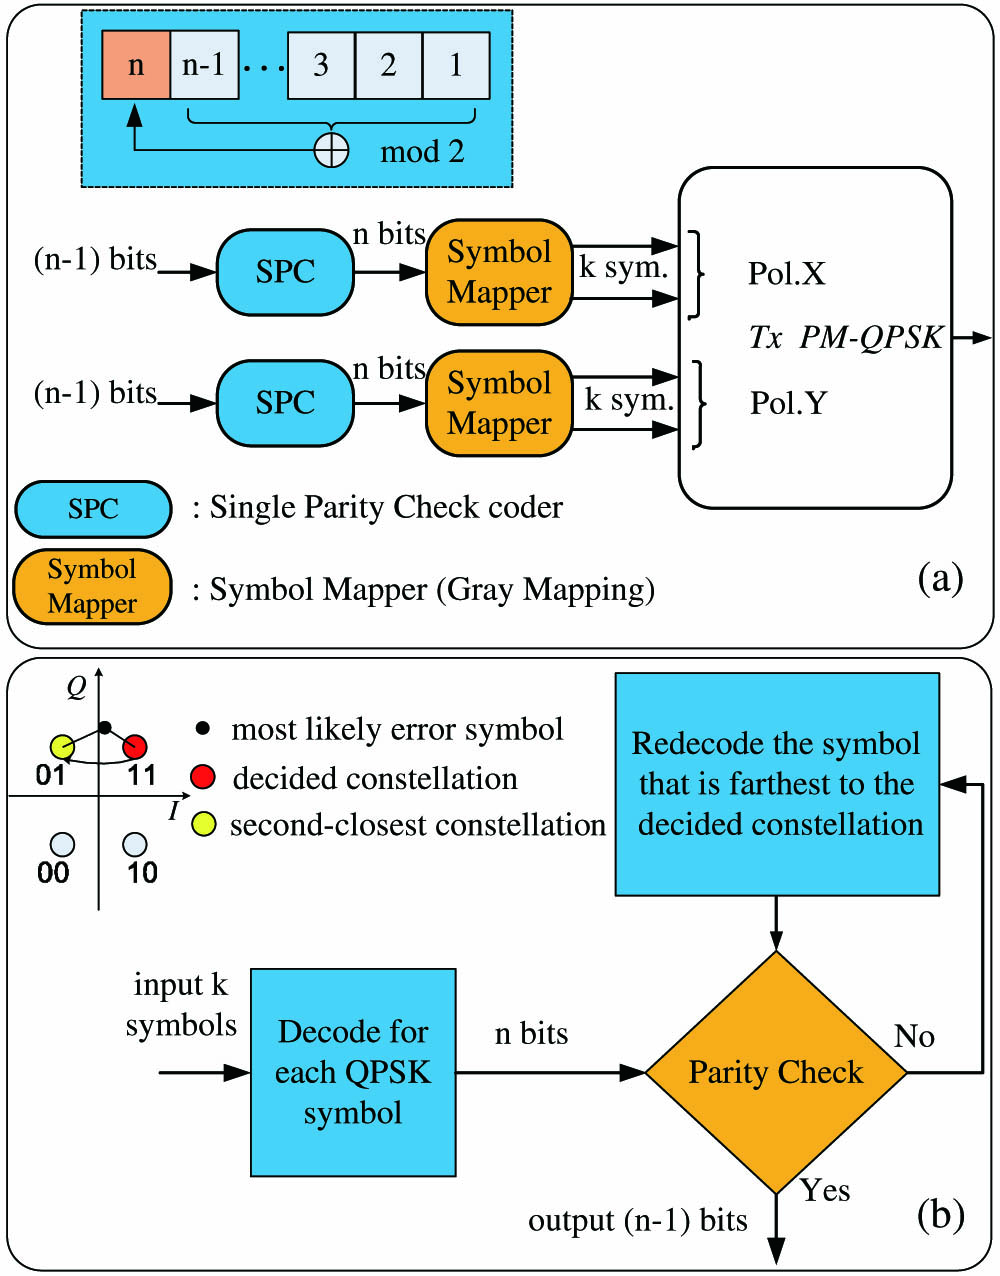 (a) PM-kSC-QPSK implementation using the PM-QPSK hardware configuration and (b) joint-decision algorithm.